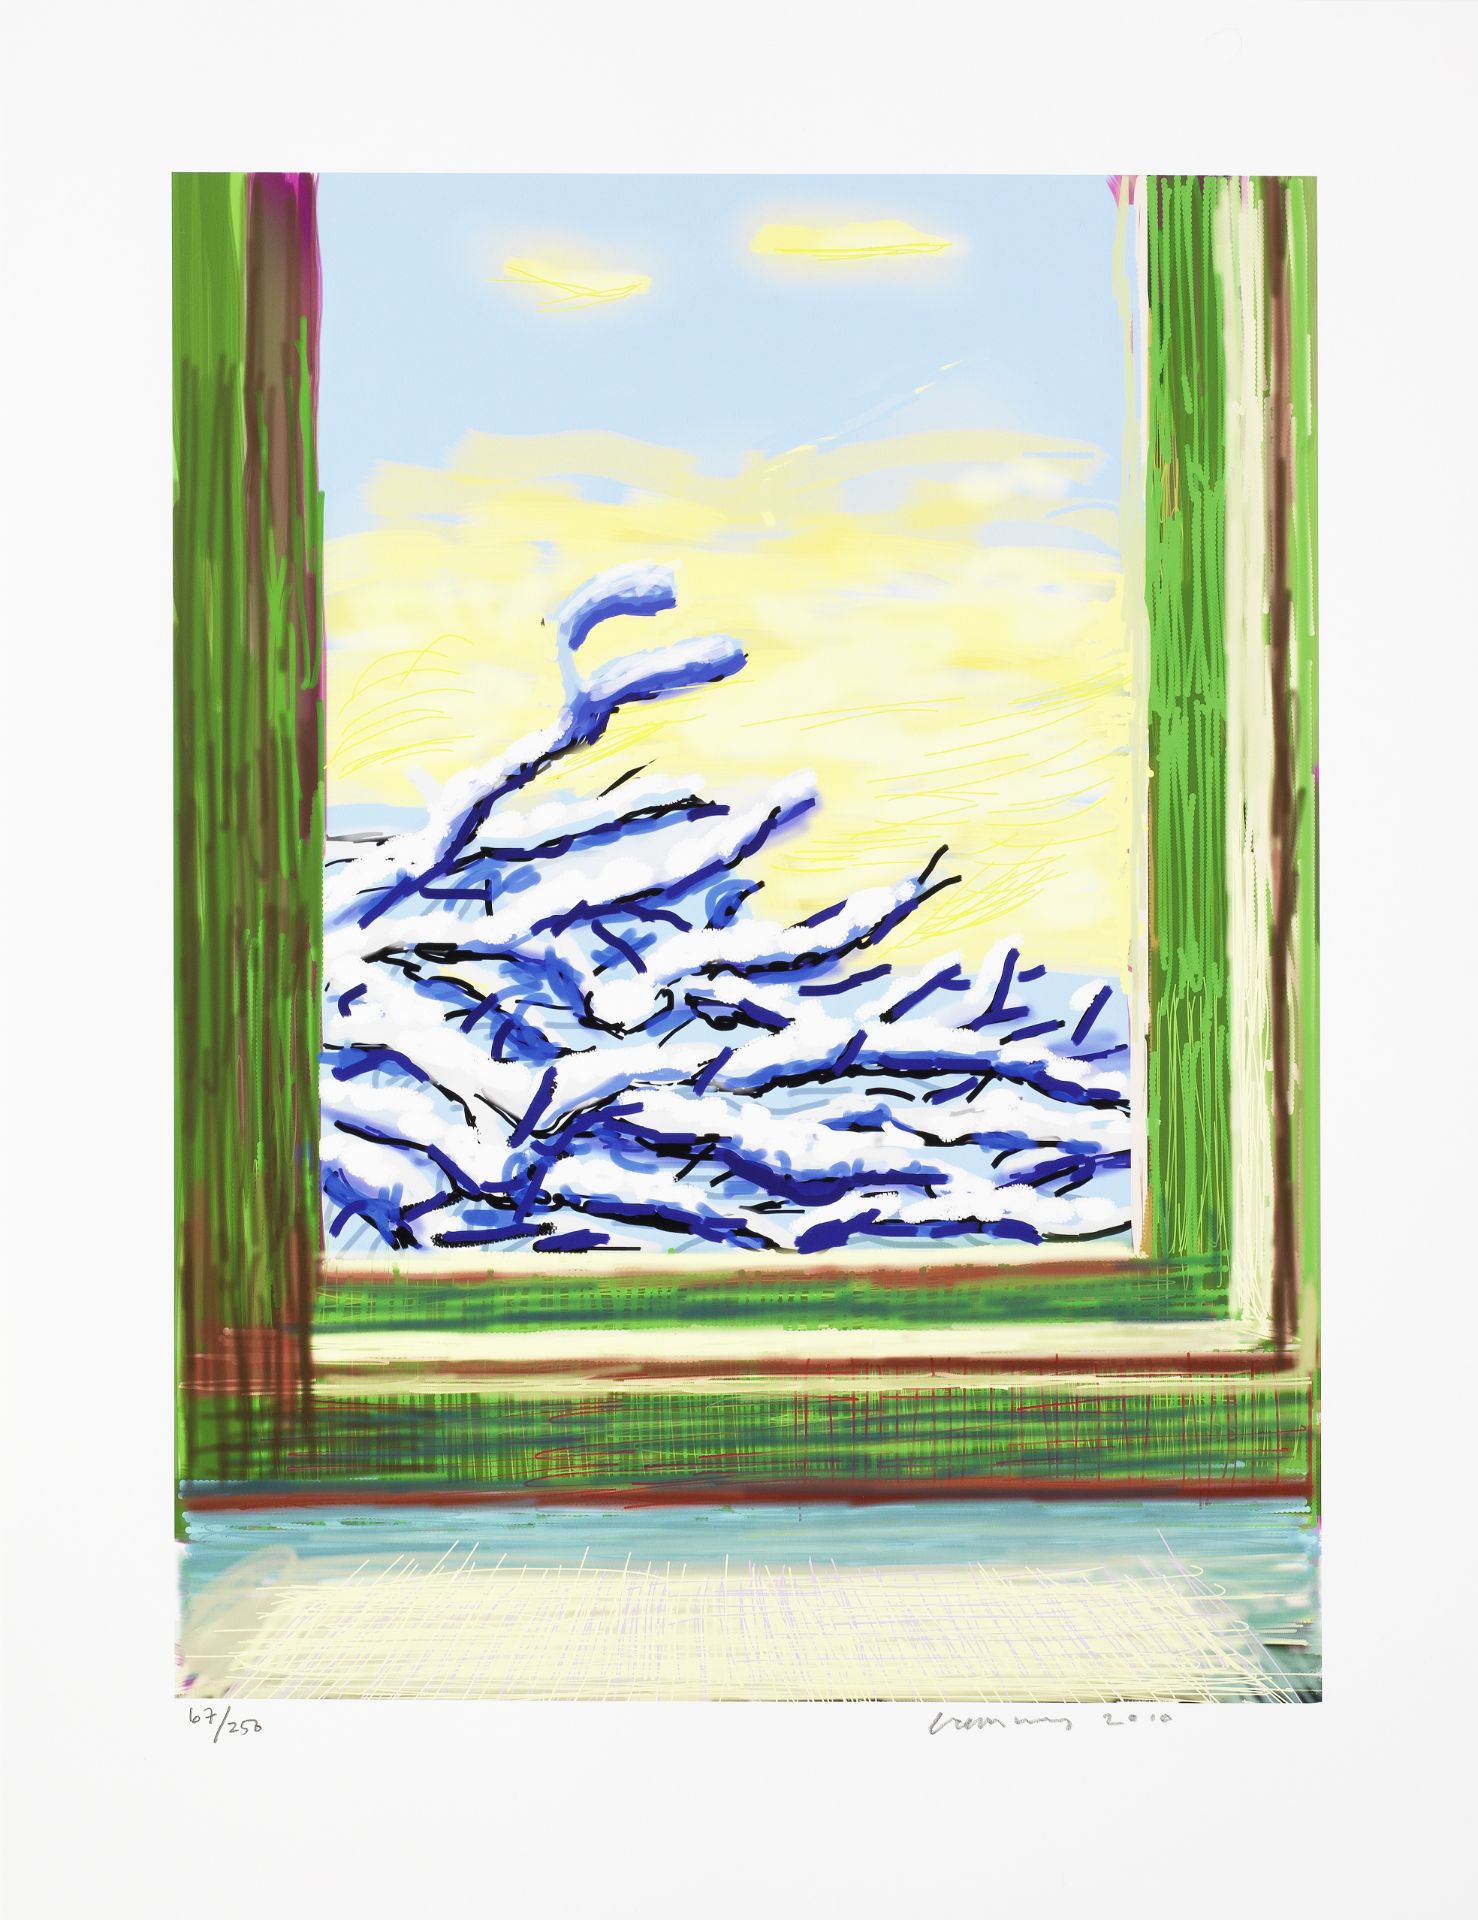 David Hockney (born 1937) My Window, Art Edition No. 610, 23 December 2010 iPad drawing in colour...